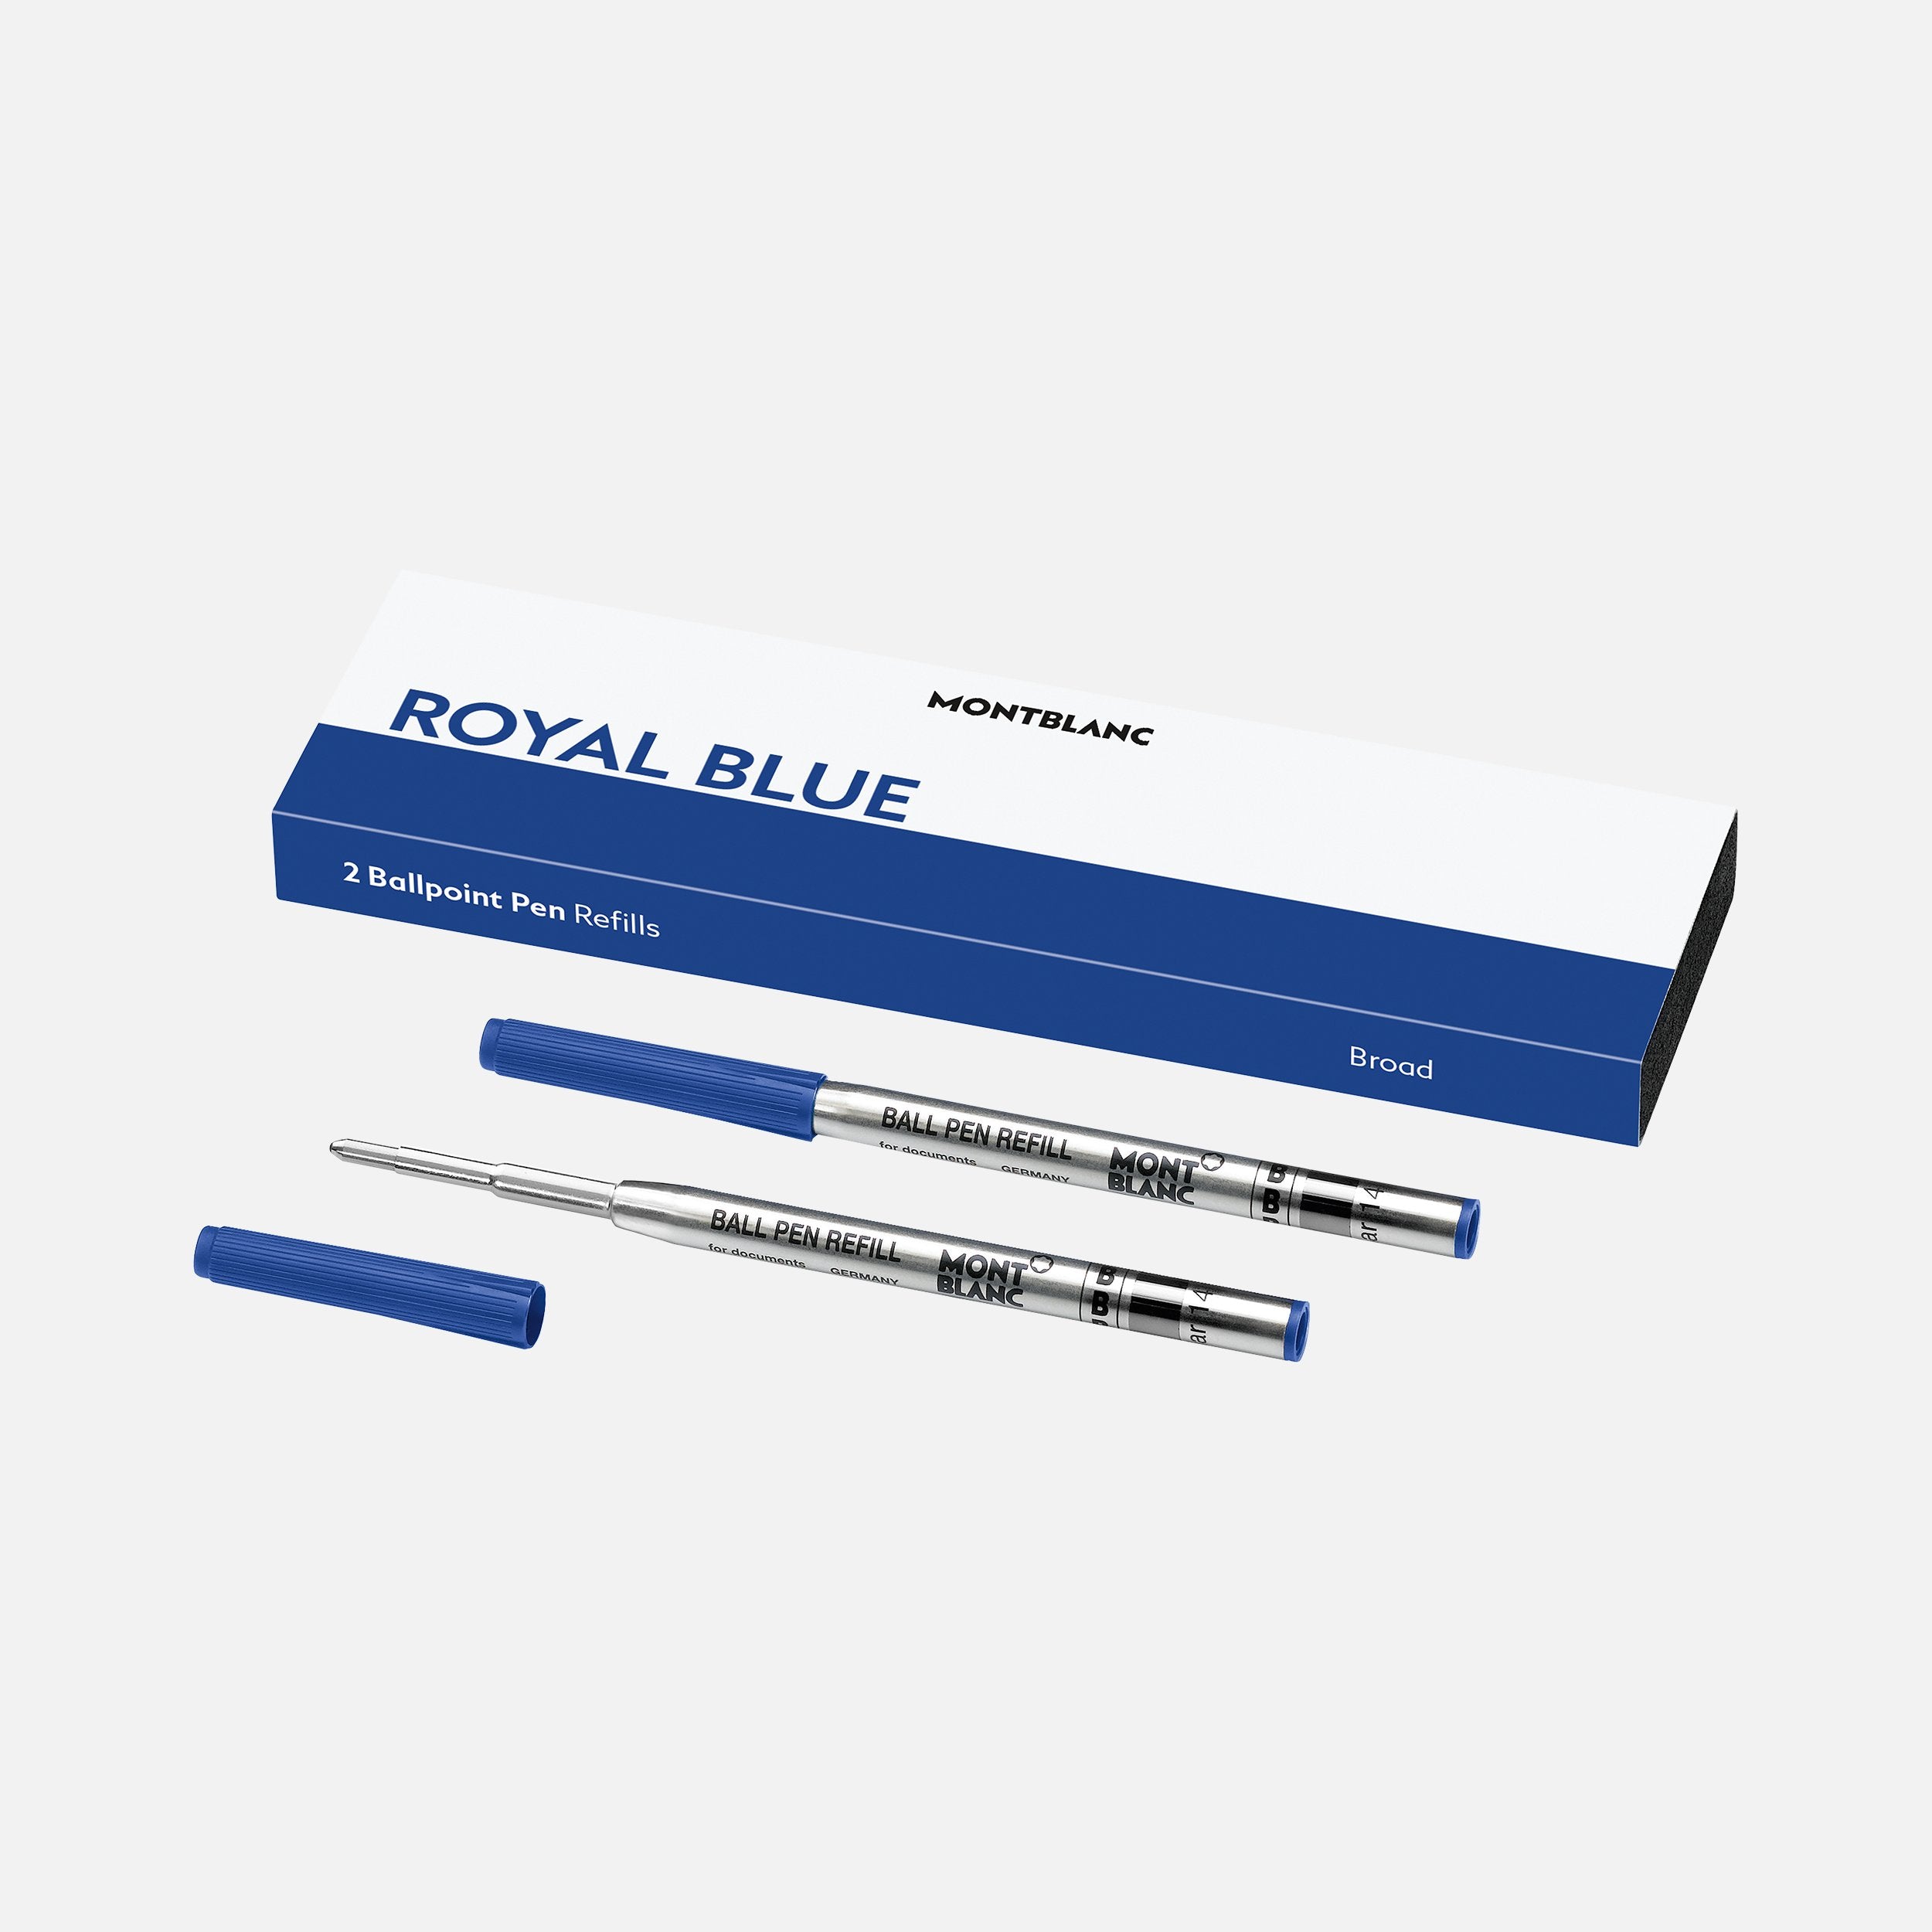 2 BALLPOINT PEN REFILLS BROAD ROYAL BLUE-MB128215